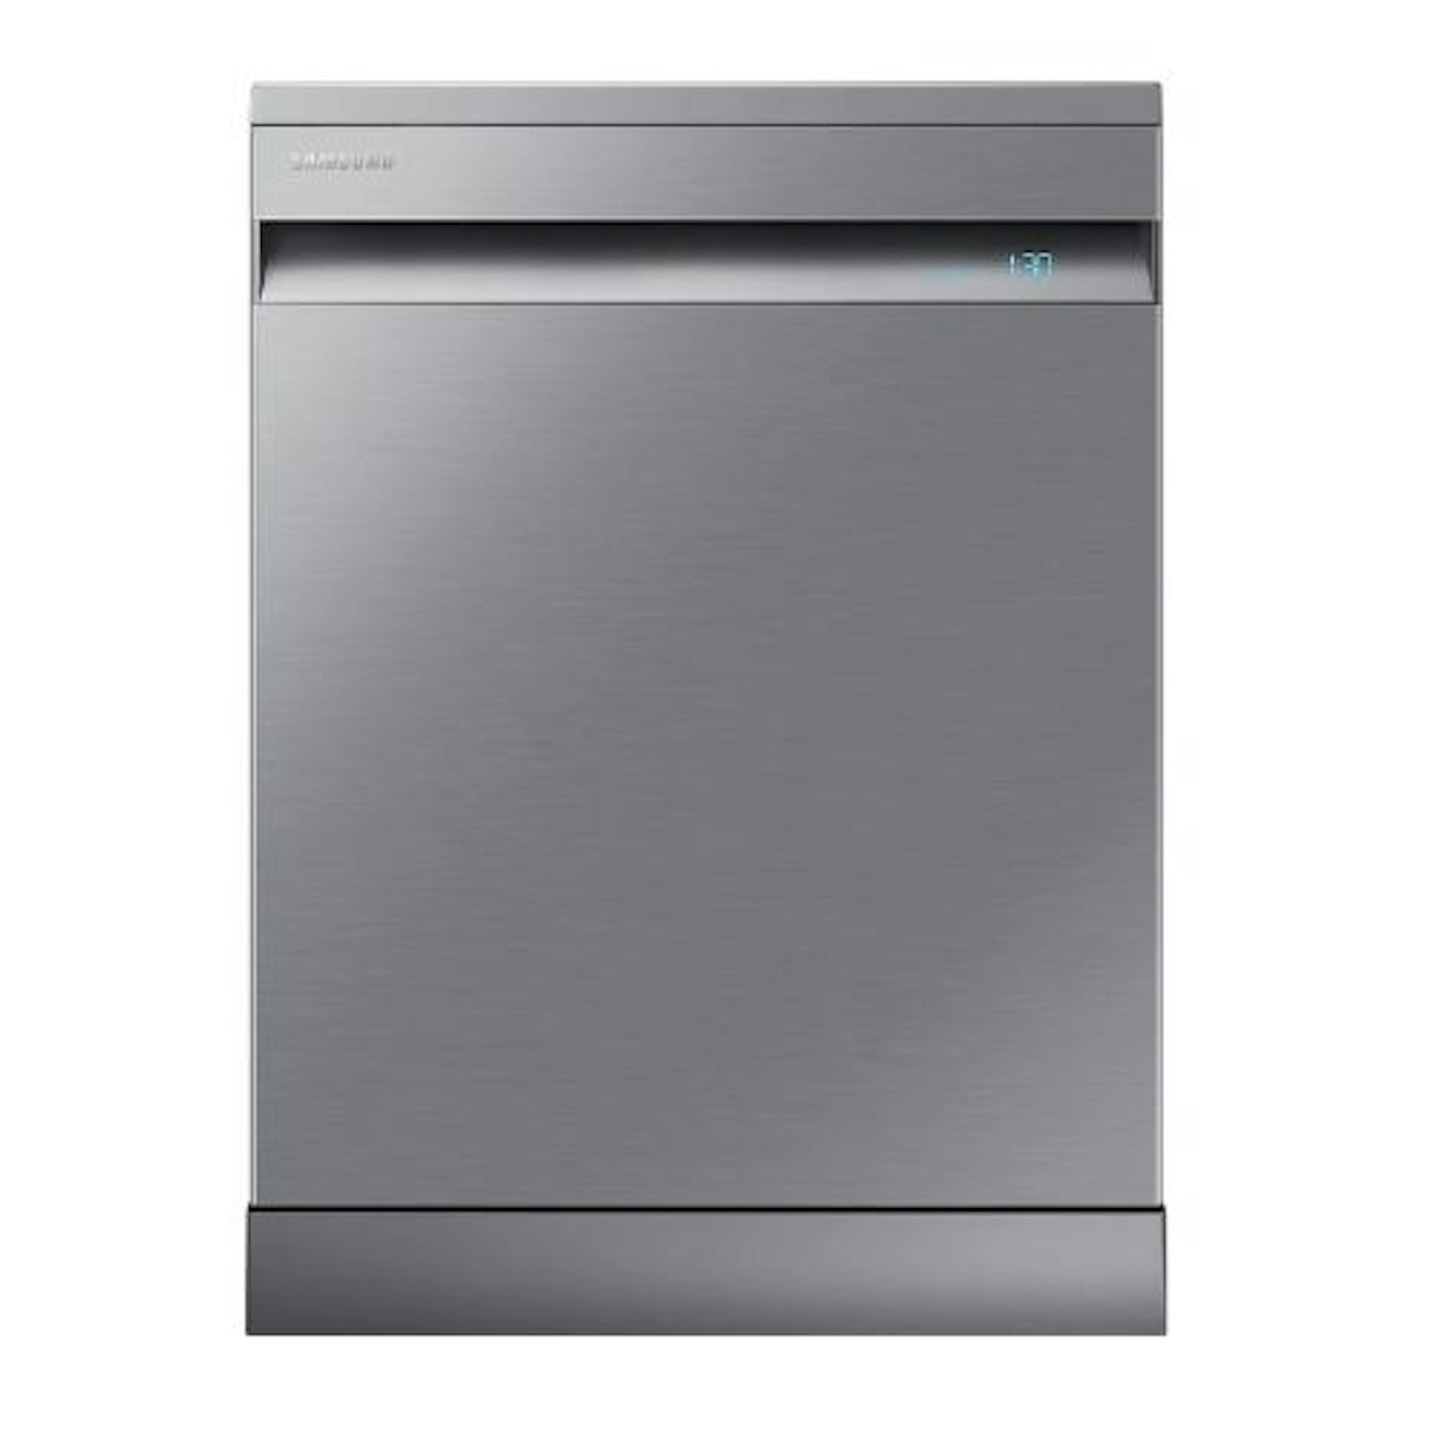 Samsung Series 11 DW60A8060FSEU Freestanding Dishwasher 